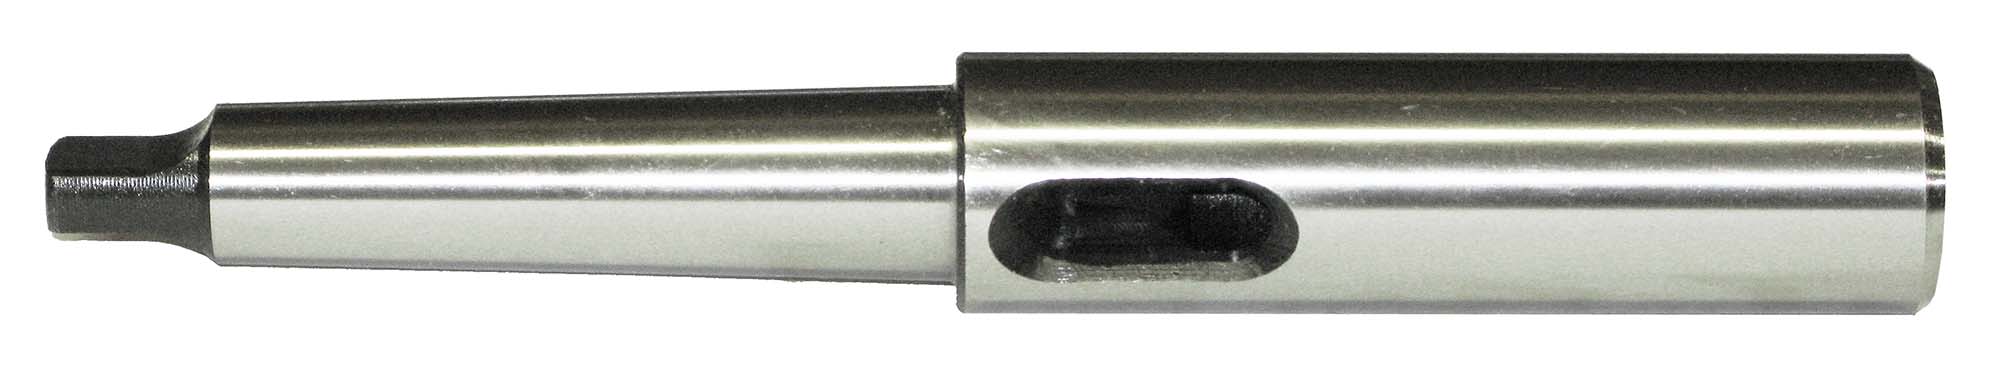 5 Morse Taper(hole)-5 Morse Taper(shank) Extension Socket, SL5-5